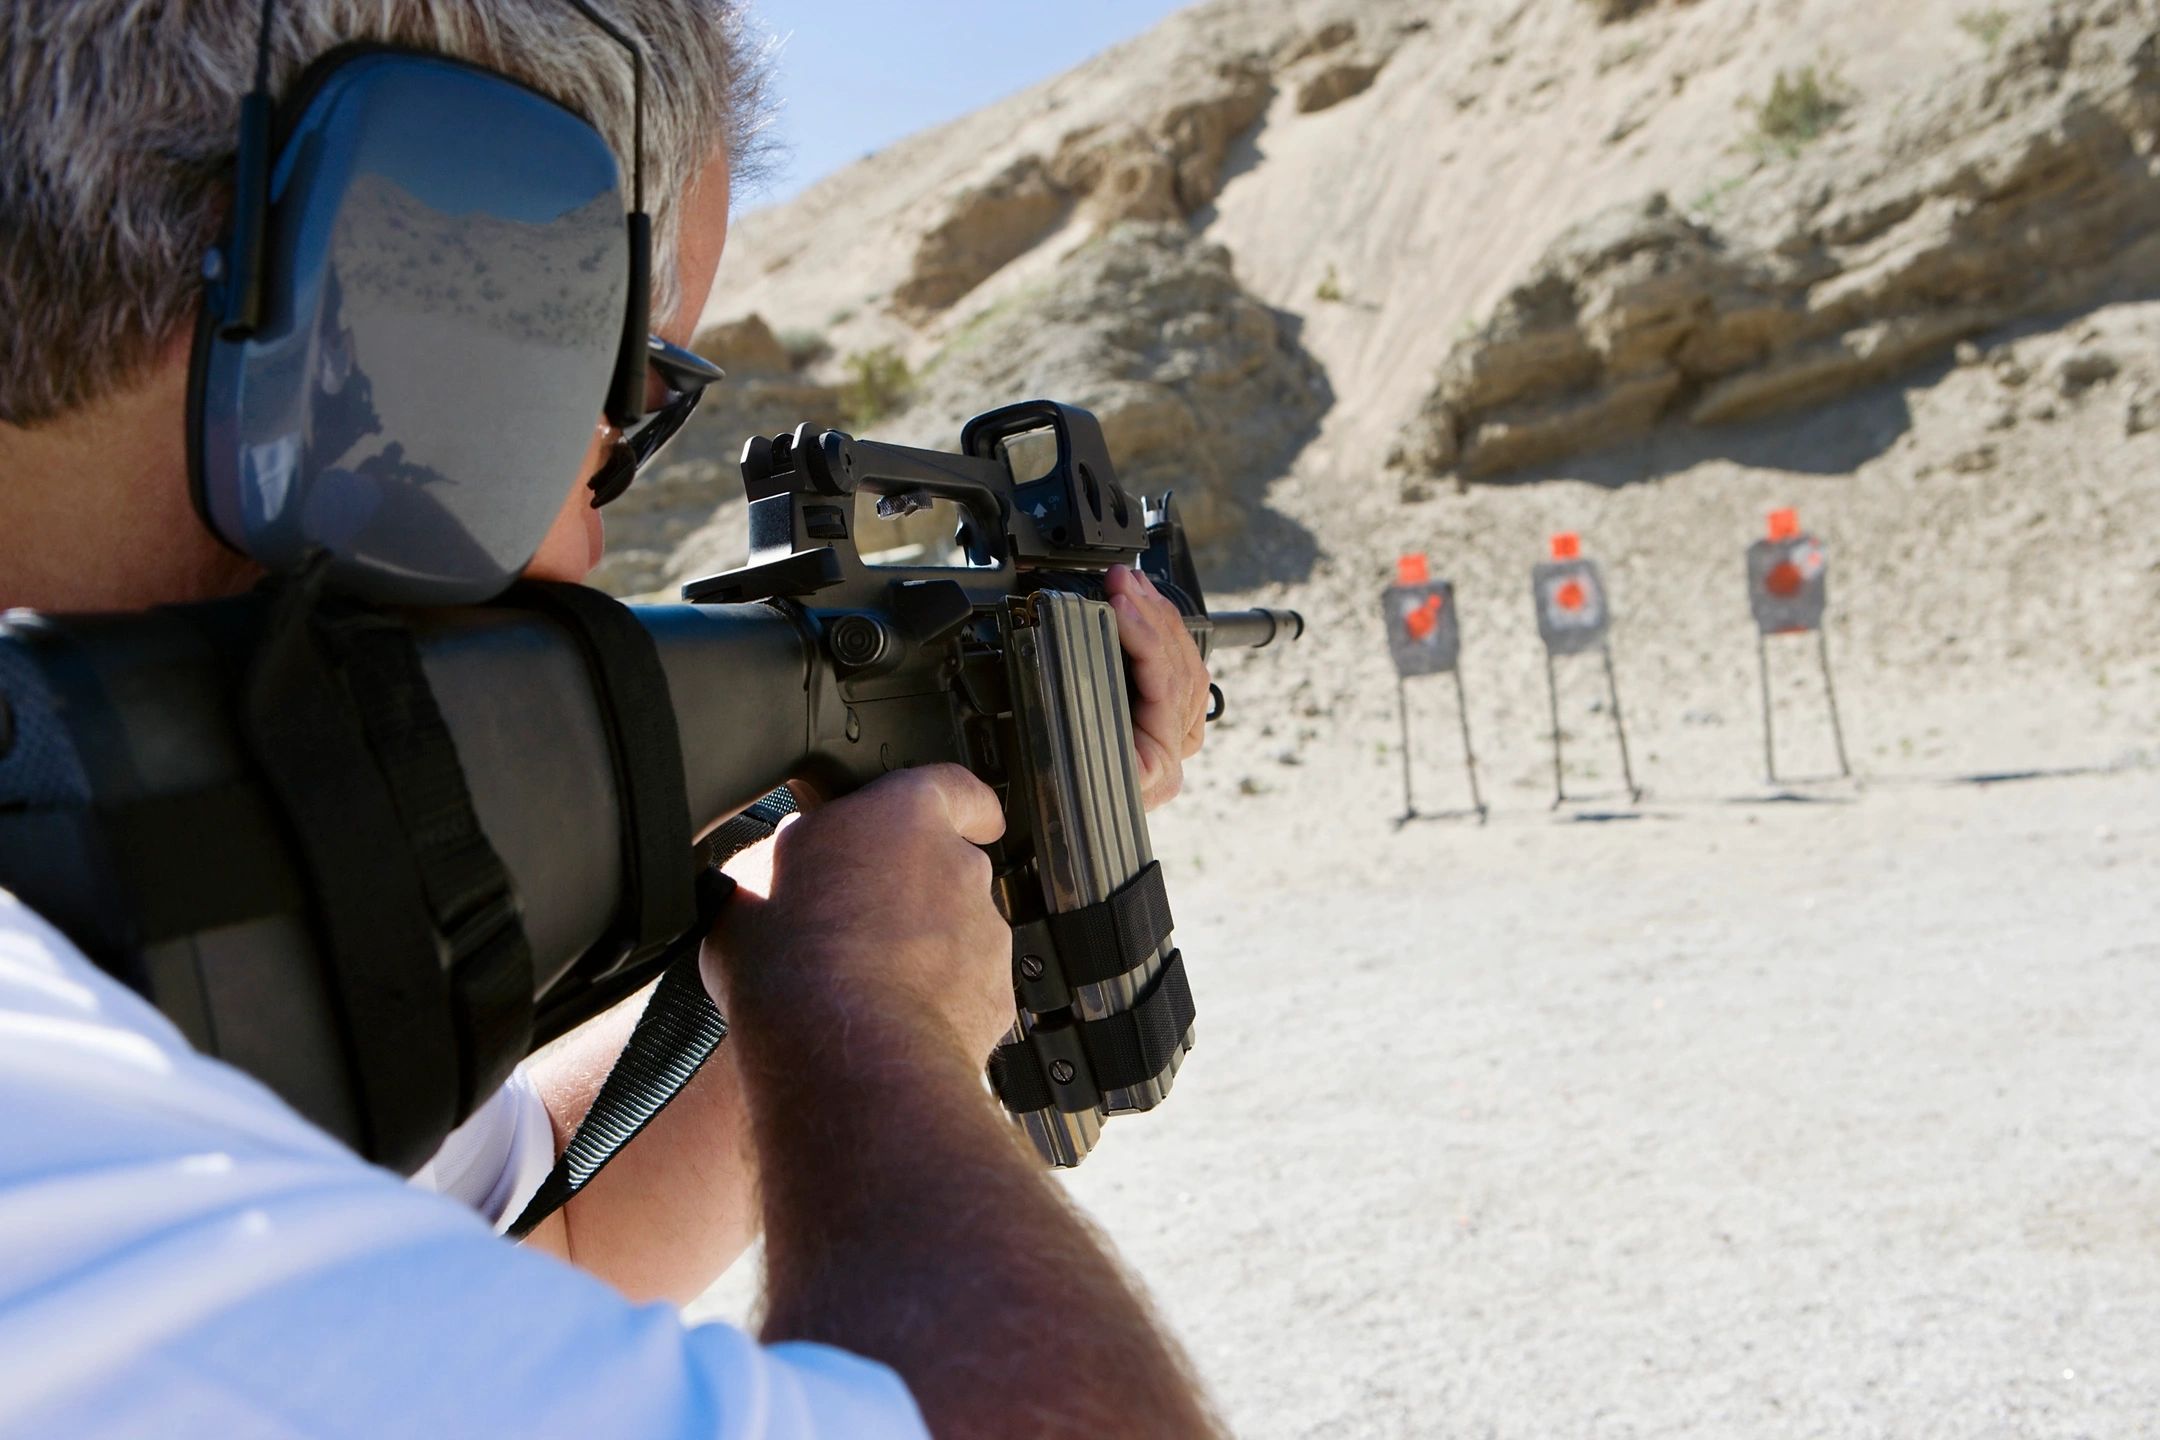 A man fires an AR-15 style rifle at a target.